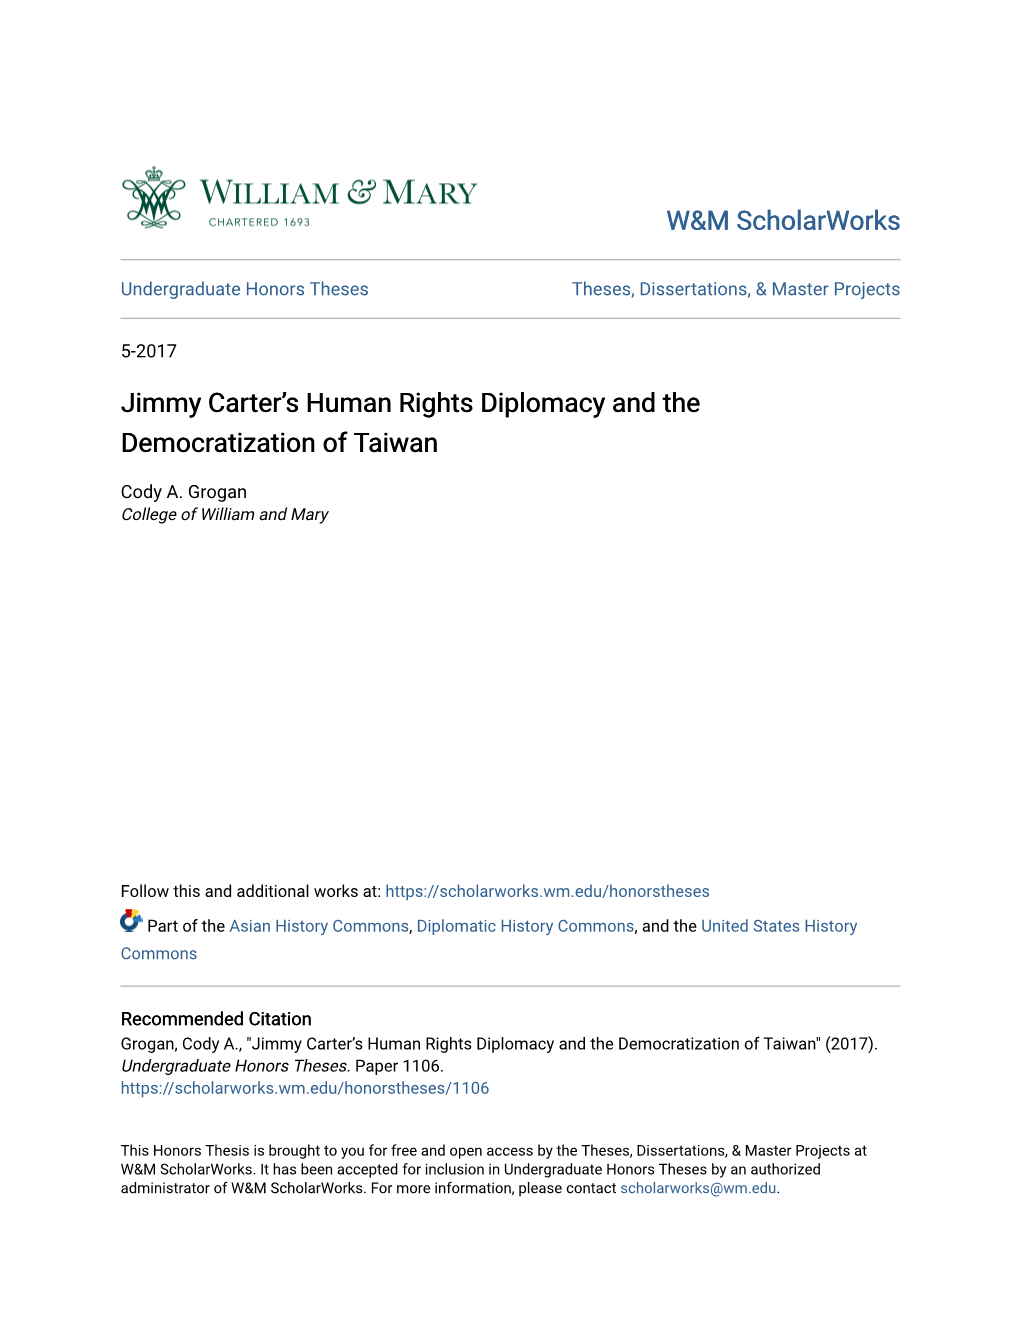 Jimmy Carterâ•Žs Human Rights Diplomacy and the Democratization